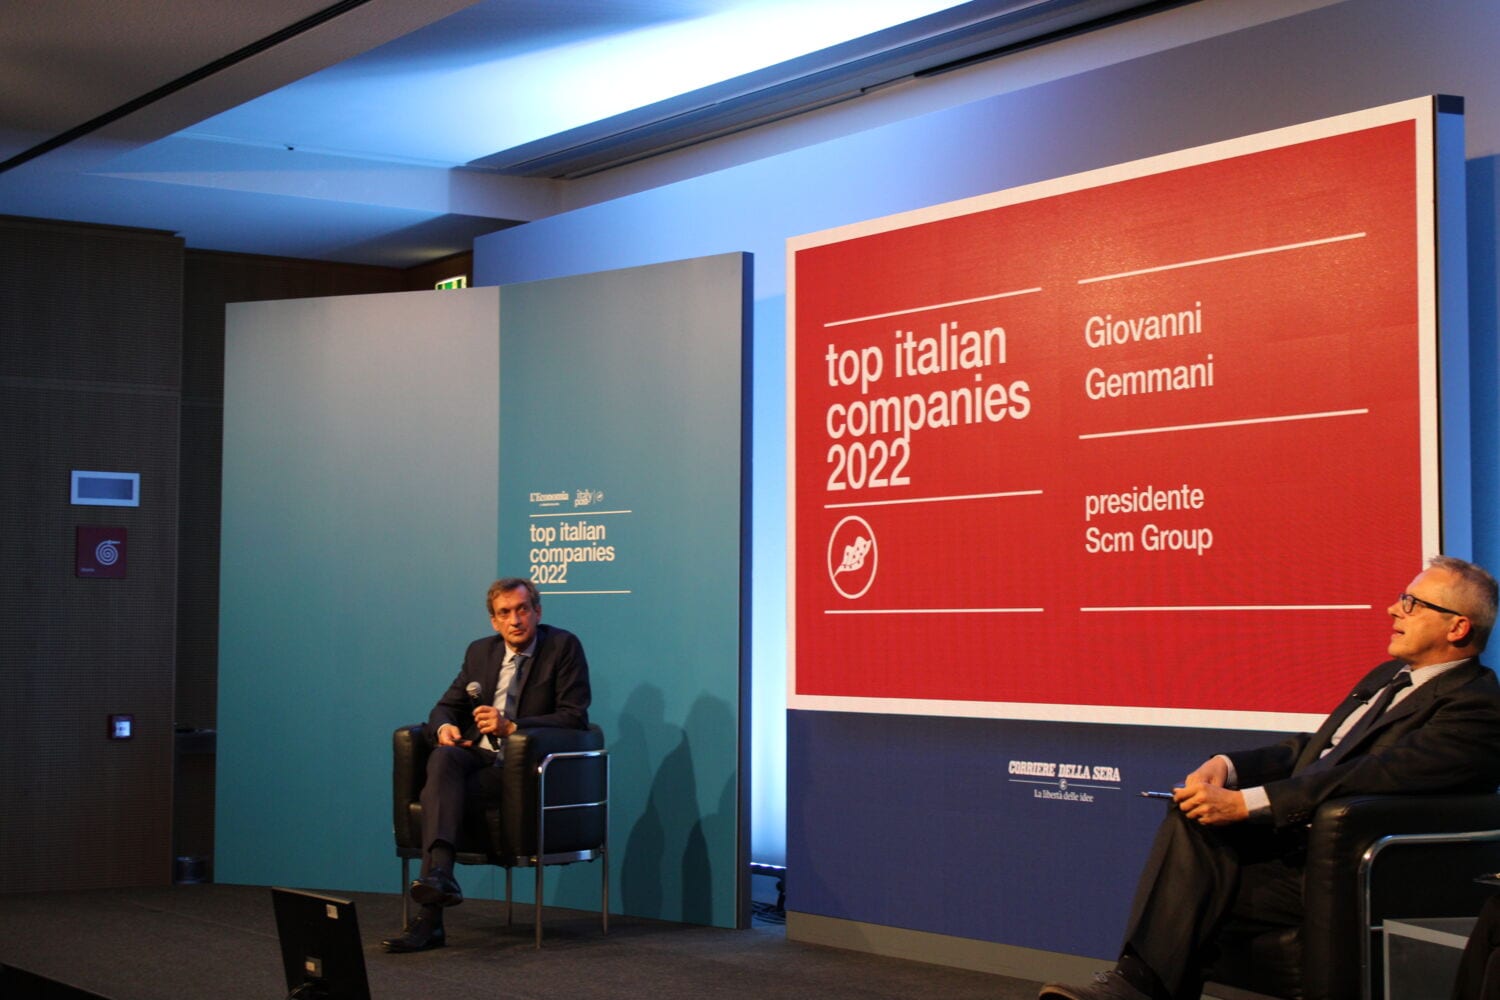 Scm Group among the 100 Italian Companies 2022